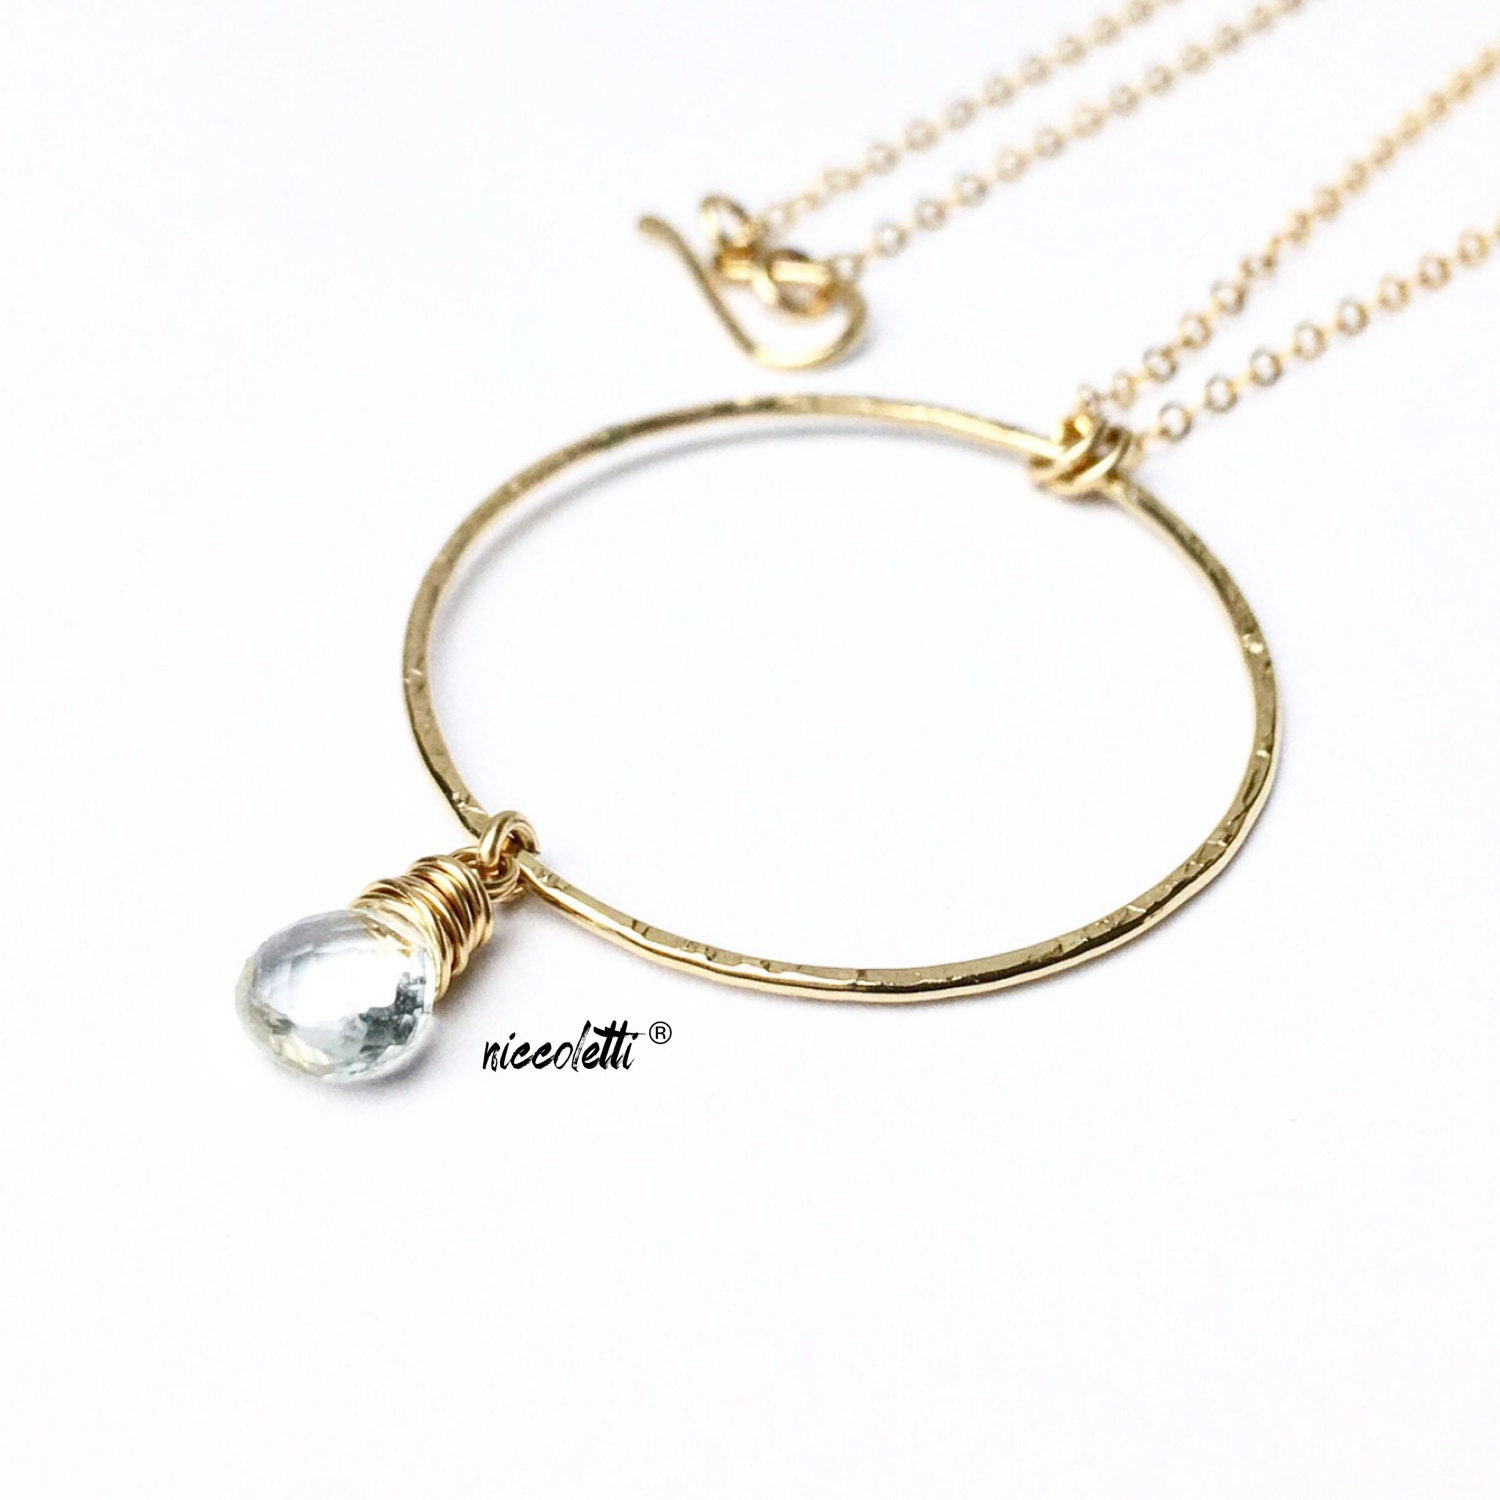 Aquamarine Necklace / March Birthstone/ Genuine Aquamarine Eternity Necklace / Gold Filled or Sterling Silver Aqumarine Necklace